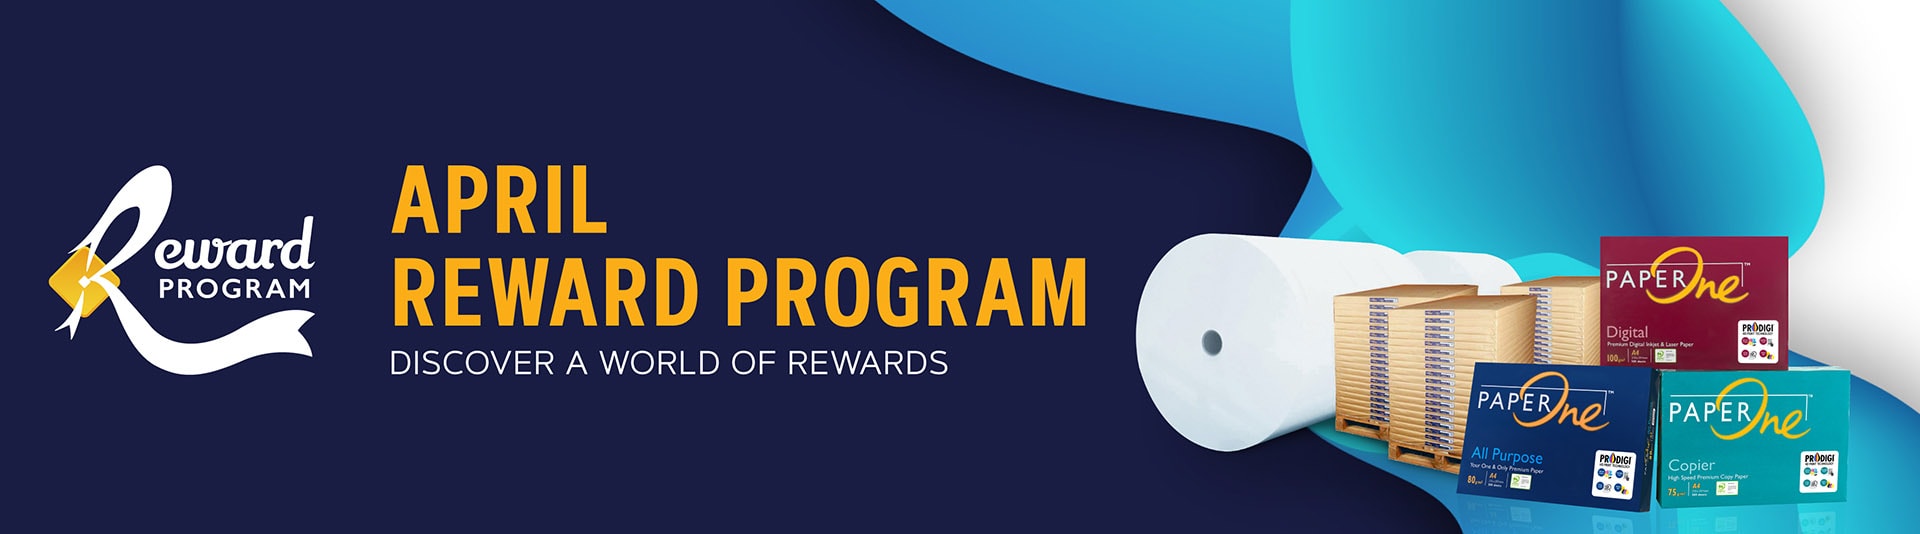 Welcome to APRIL Reward Program